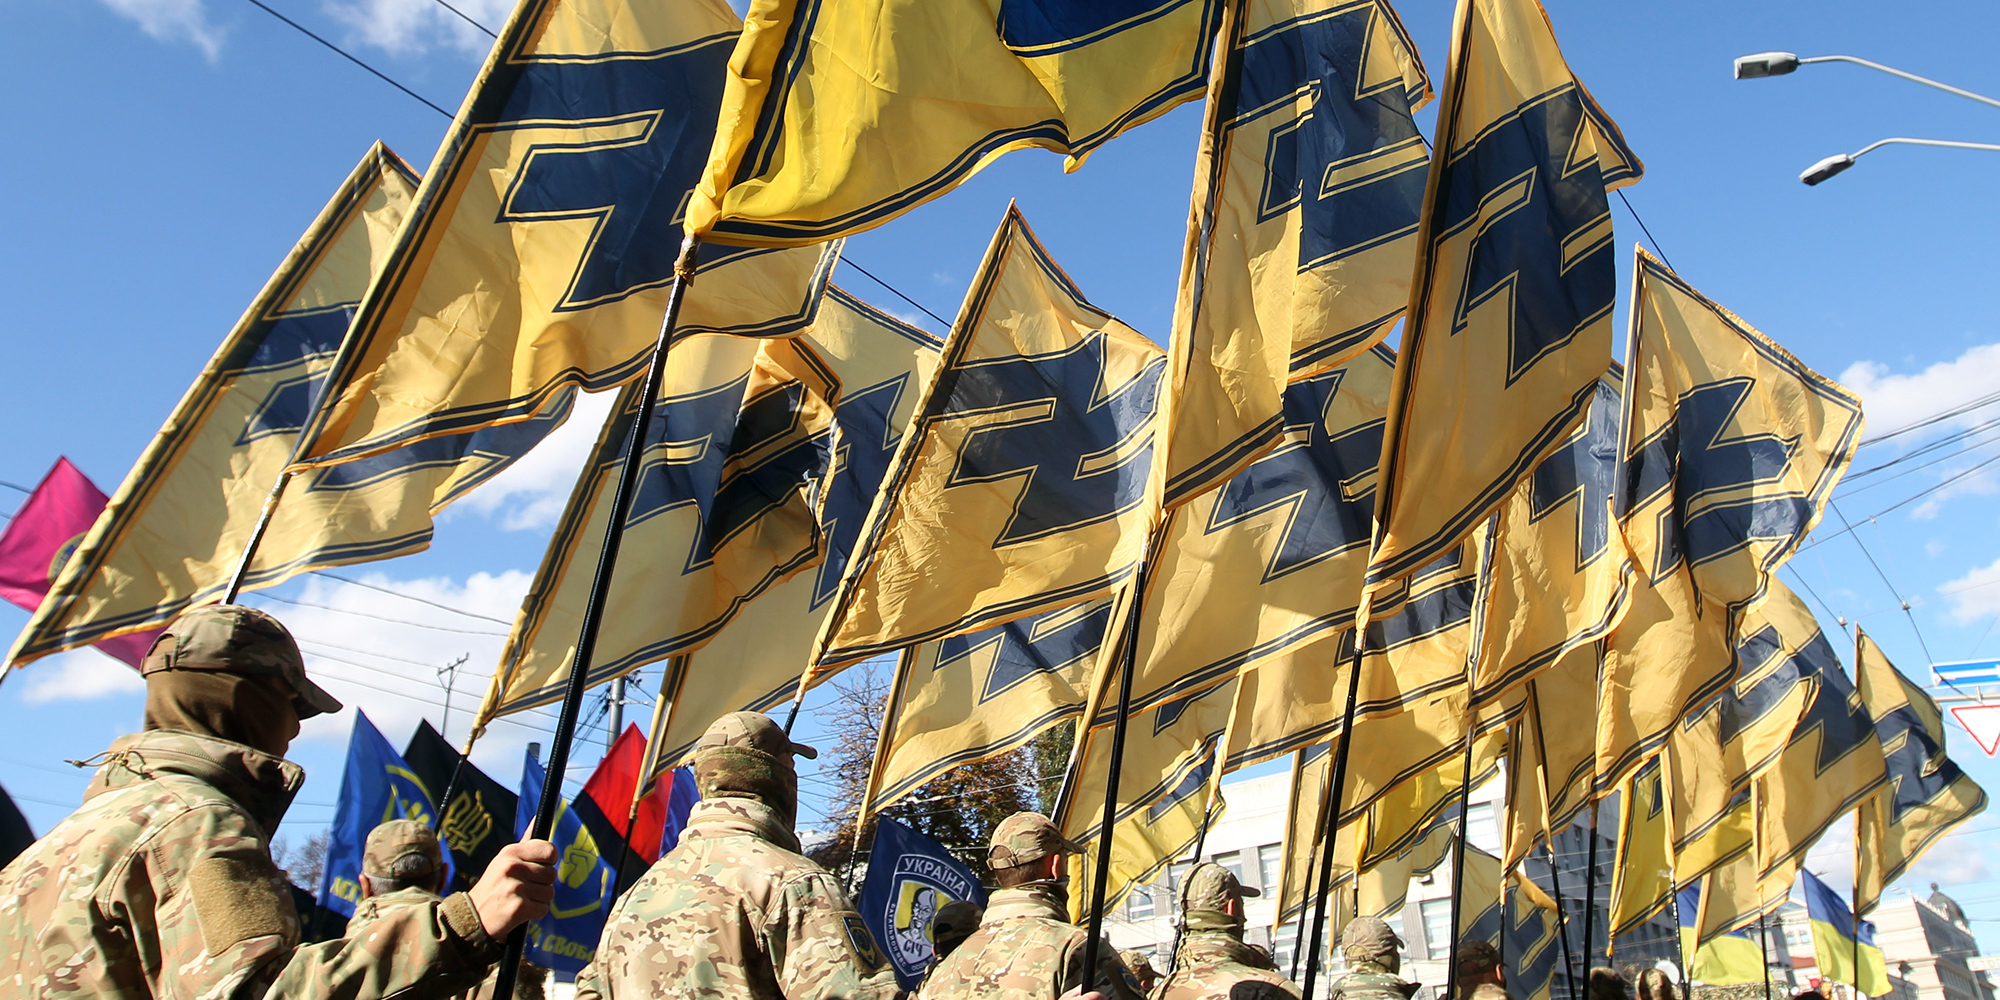 https://theintercept.imgix.net/wp-uploads/sites/1/2022/02/GettyImages-1229073971-azov-regiment-ukrainian-army-nationalist.jpg